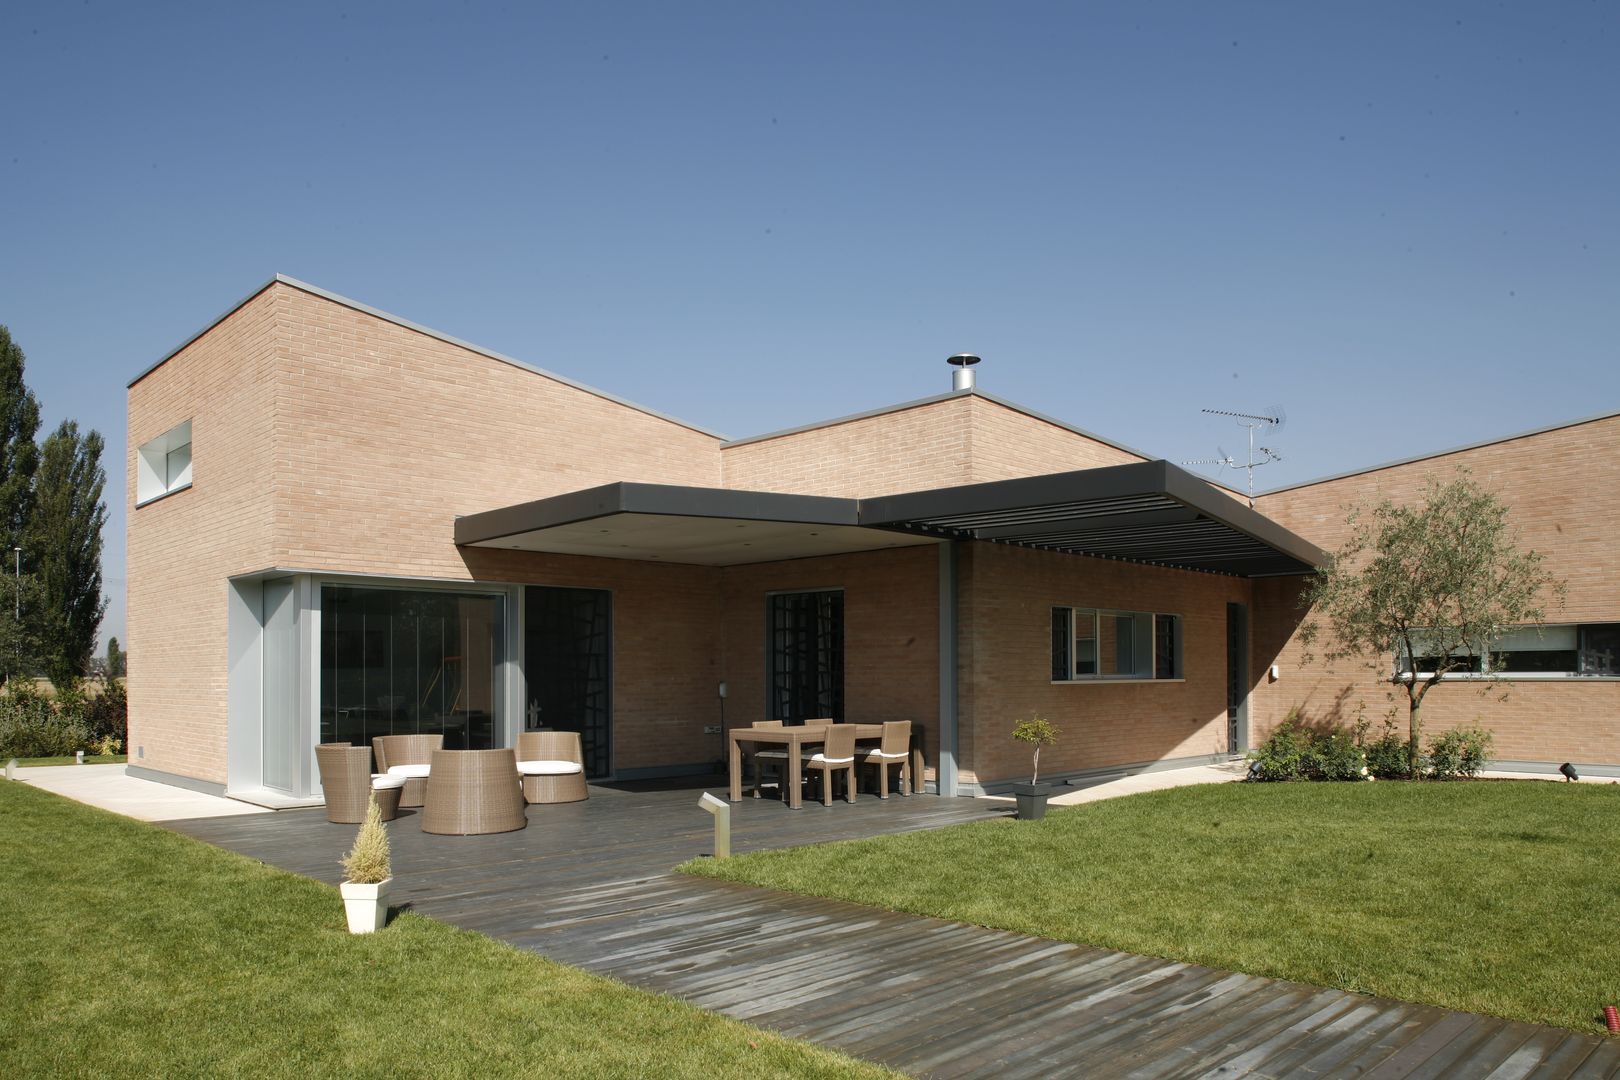 CASA PRIVATA BOLOGNA, OPEN PROJECT OPEN PROJECT Rumah: Ide desain interior, inspirasi & gambar